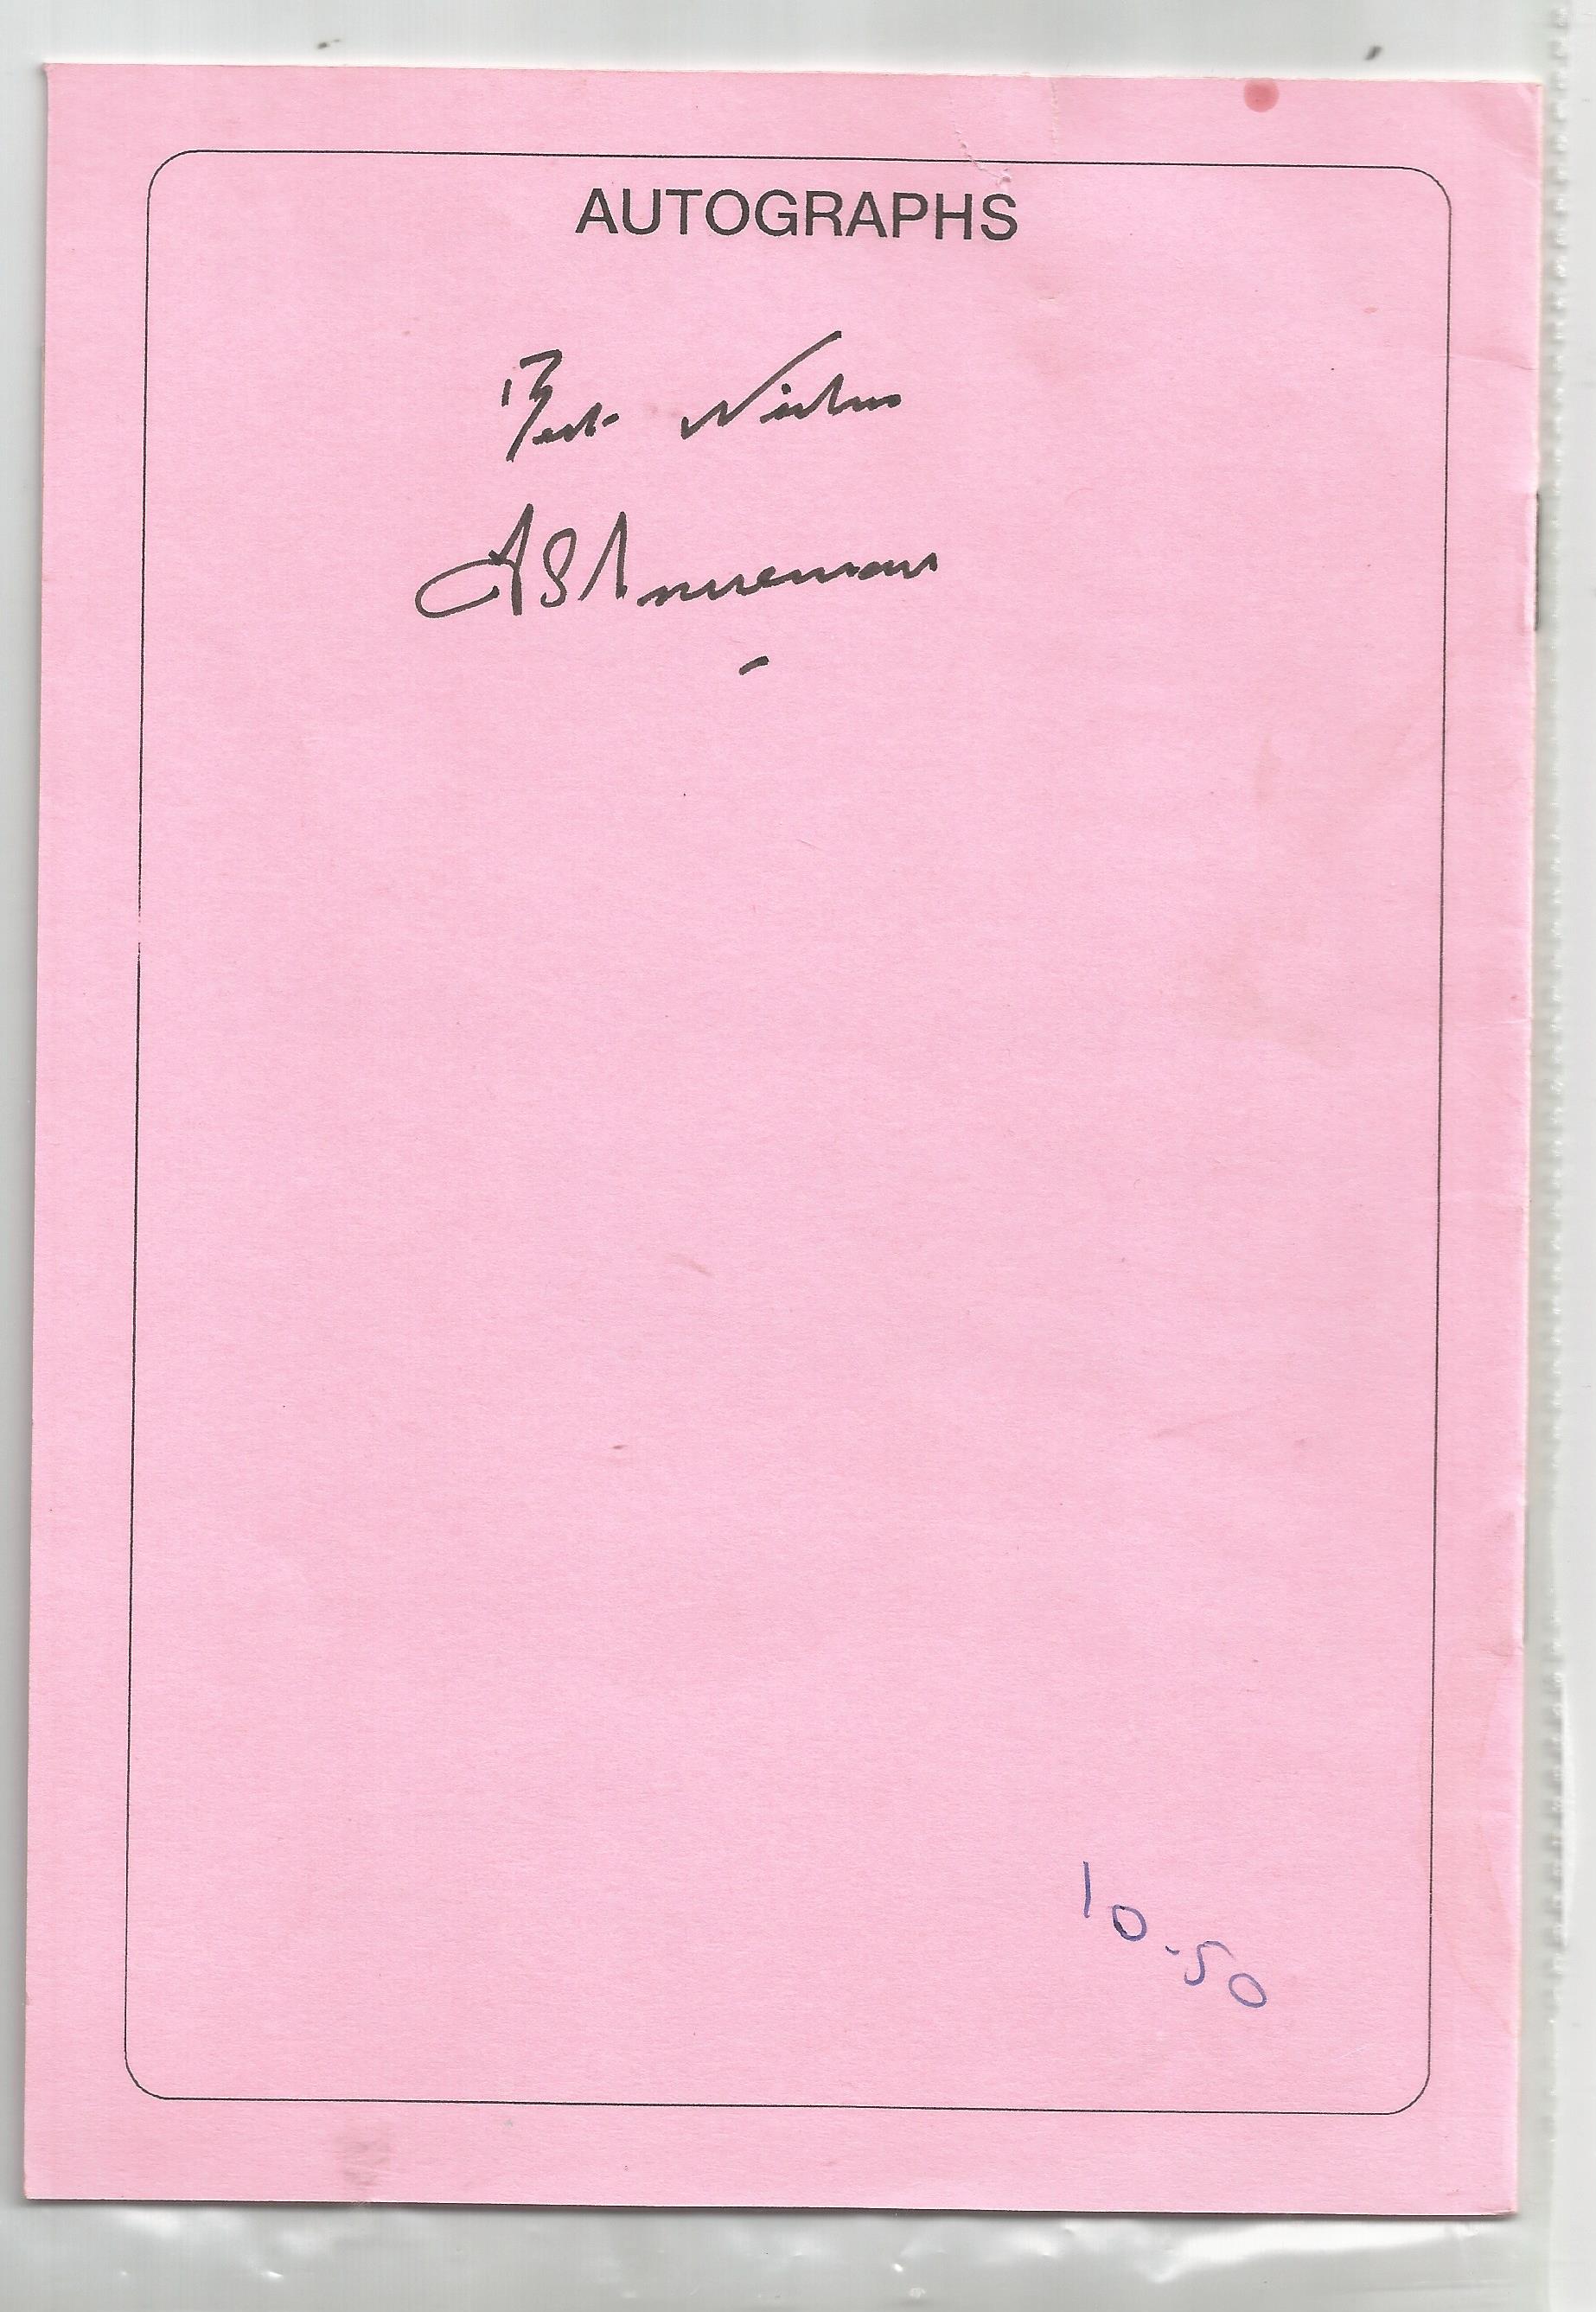 Cricket Freddie Trueman signed dinner menu. Good Condition. All autographs are genuine hand signed